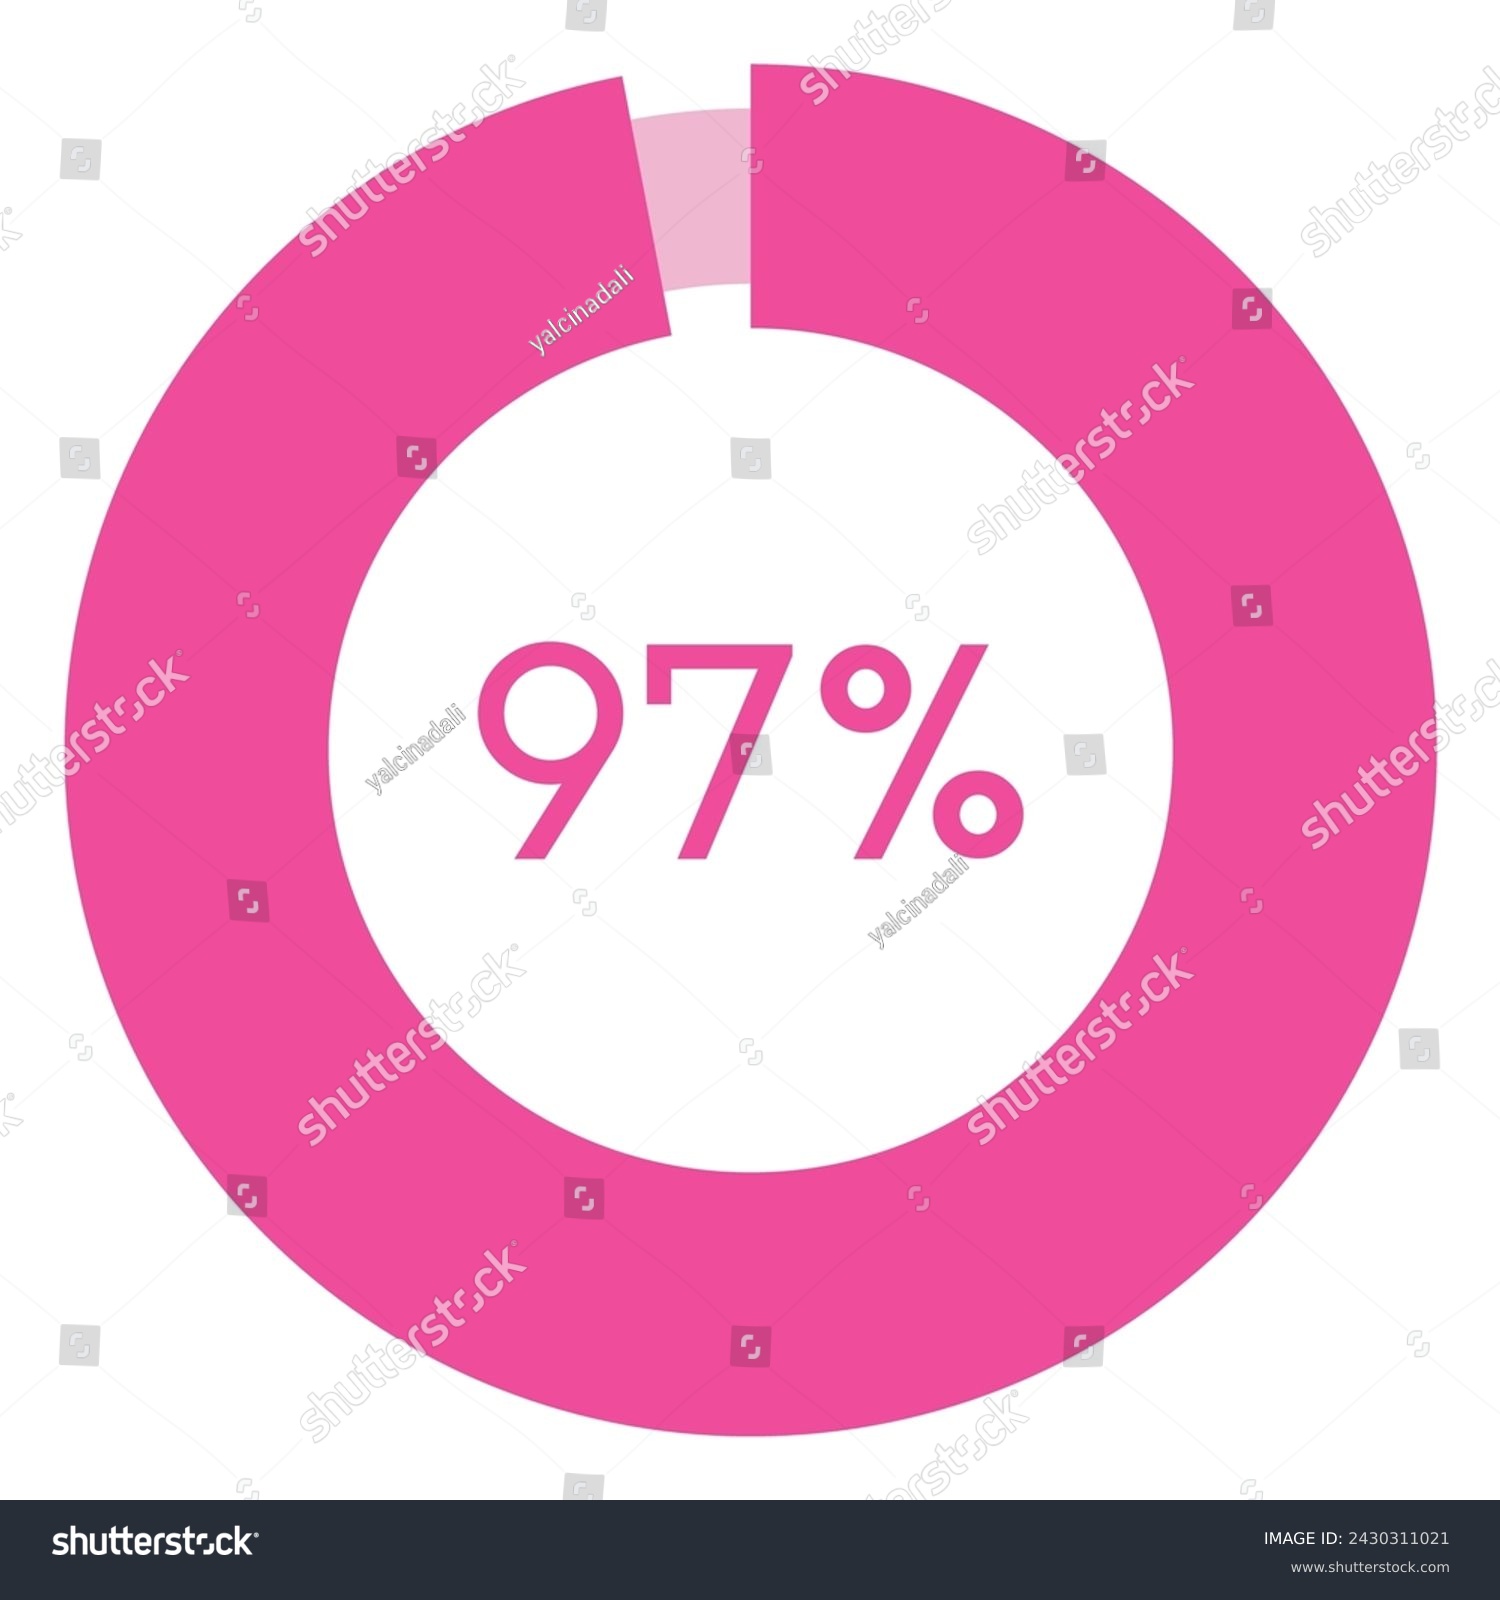 SVG of 97 percent,pink circle shape percentage diagram vector,circular infographic chart. svg